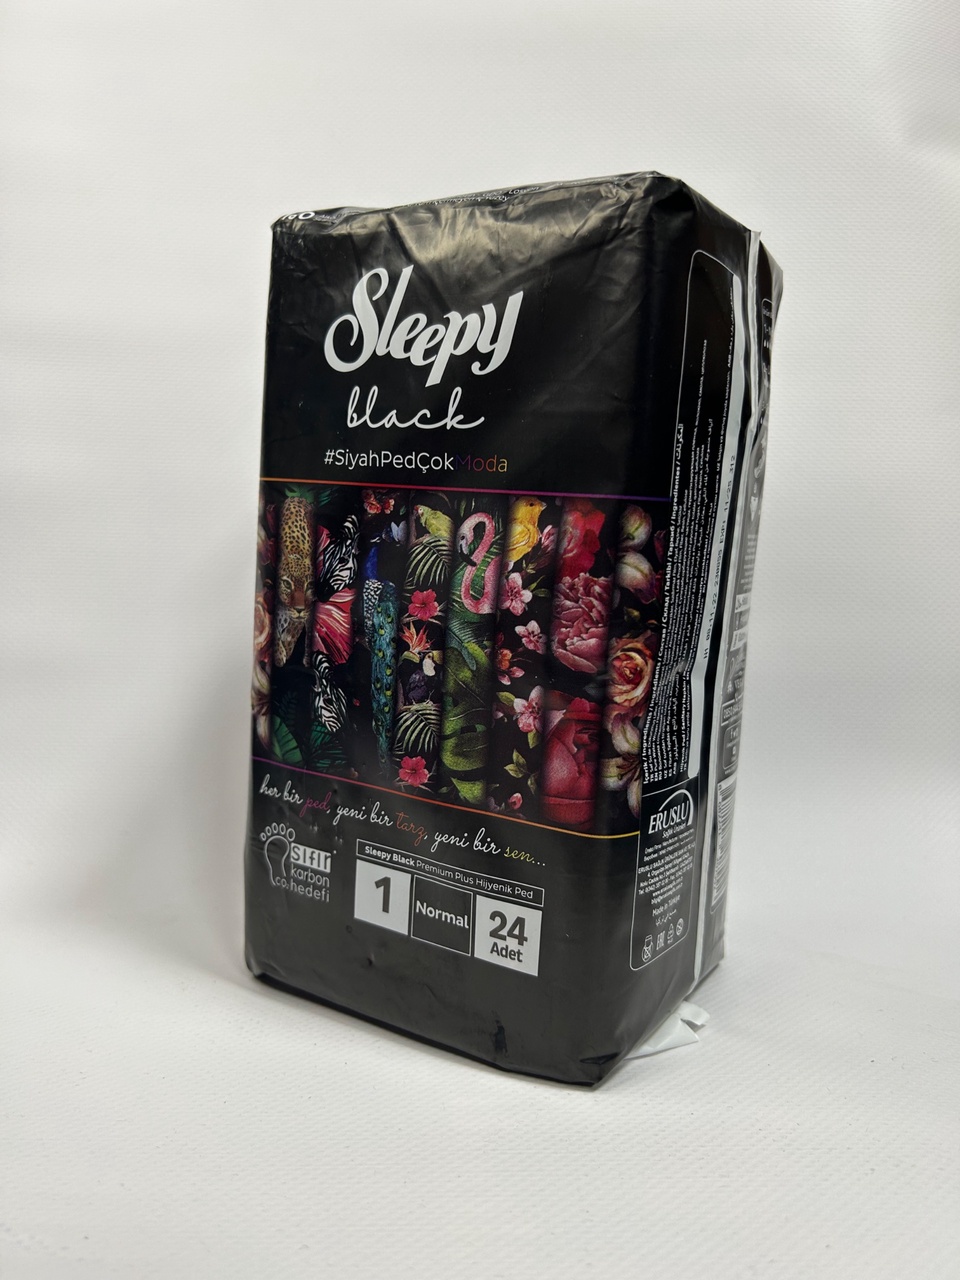 Прокладки Sleepy Blek “Normal” 24шт (1) - 200 ₽, заказать онлайн.